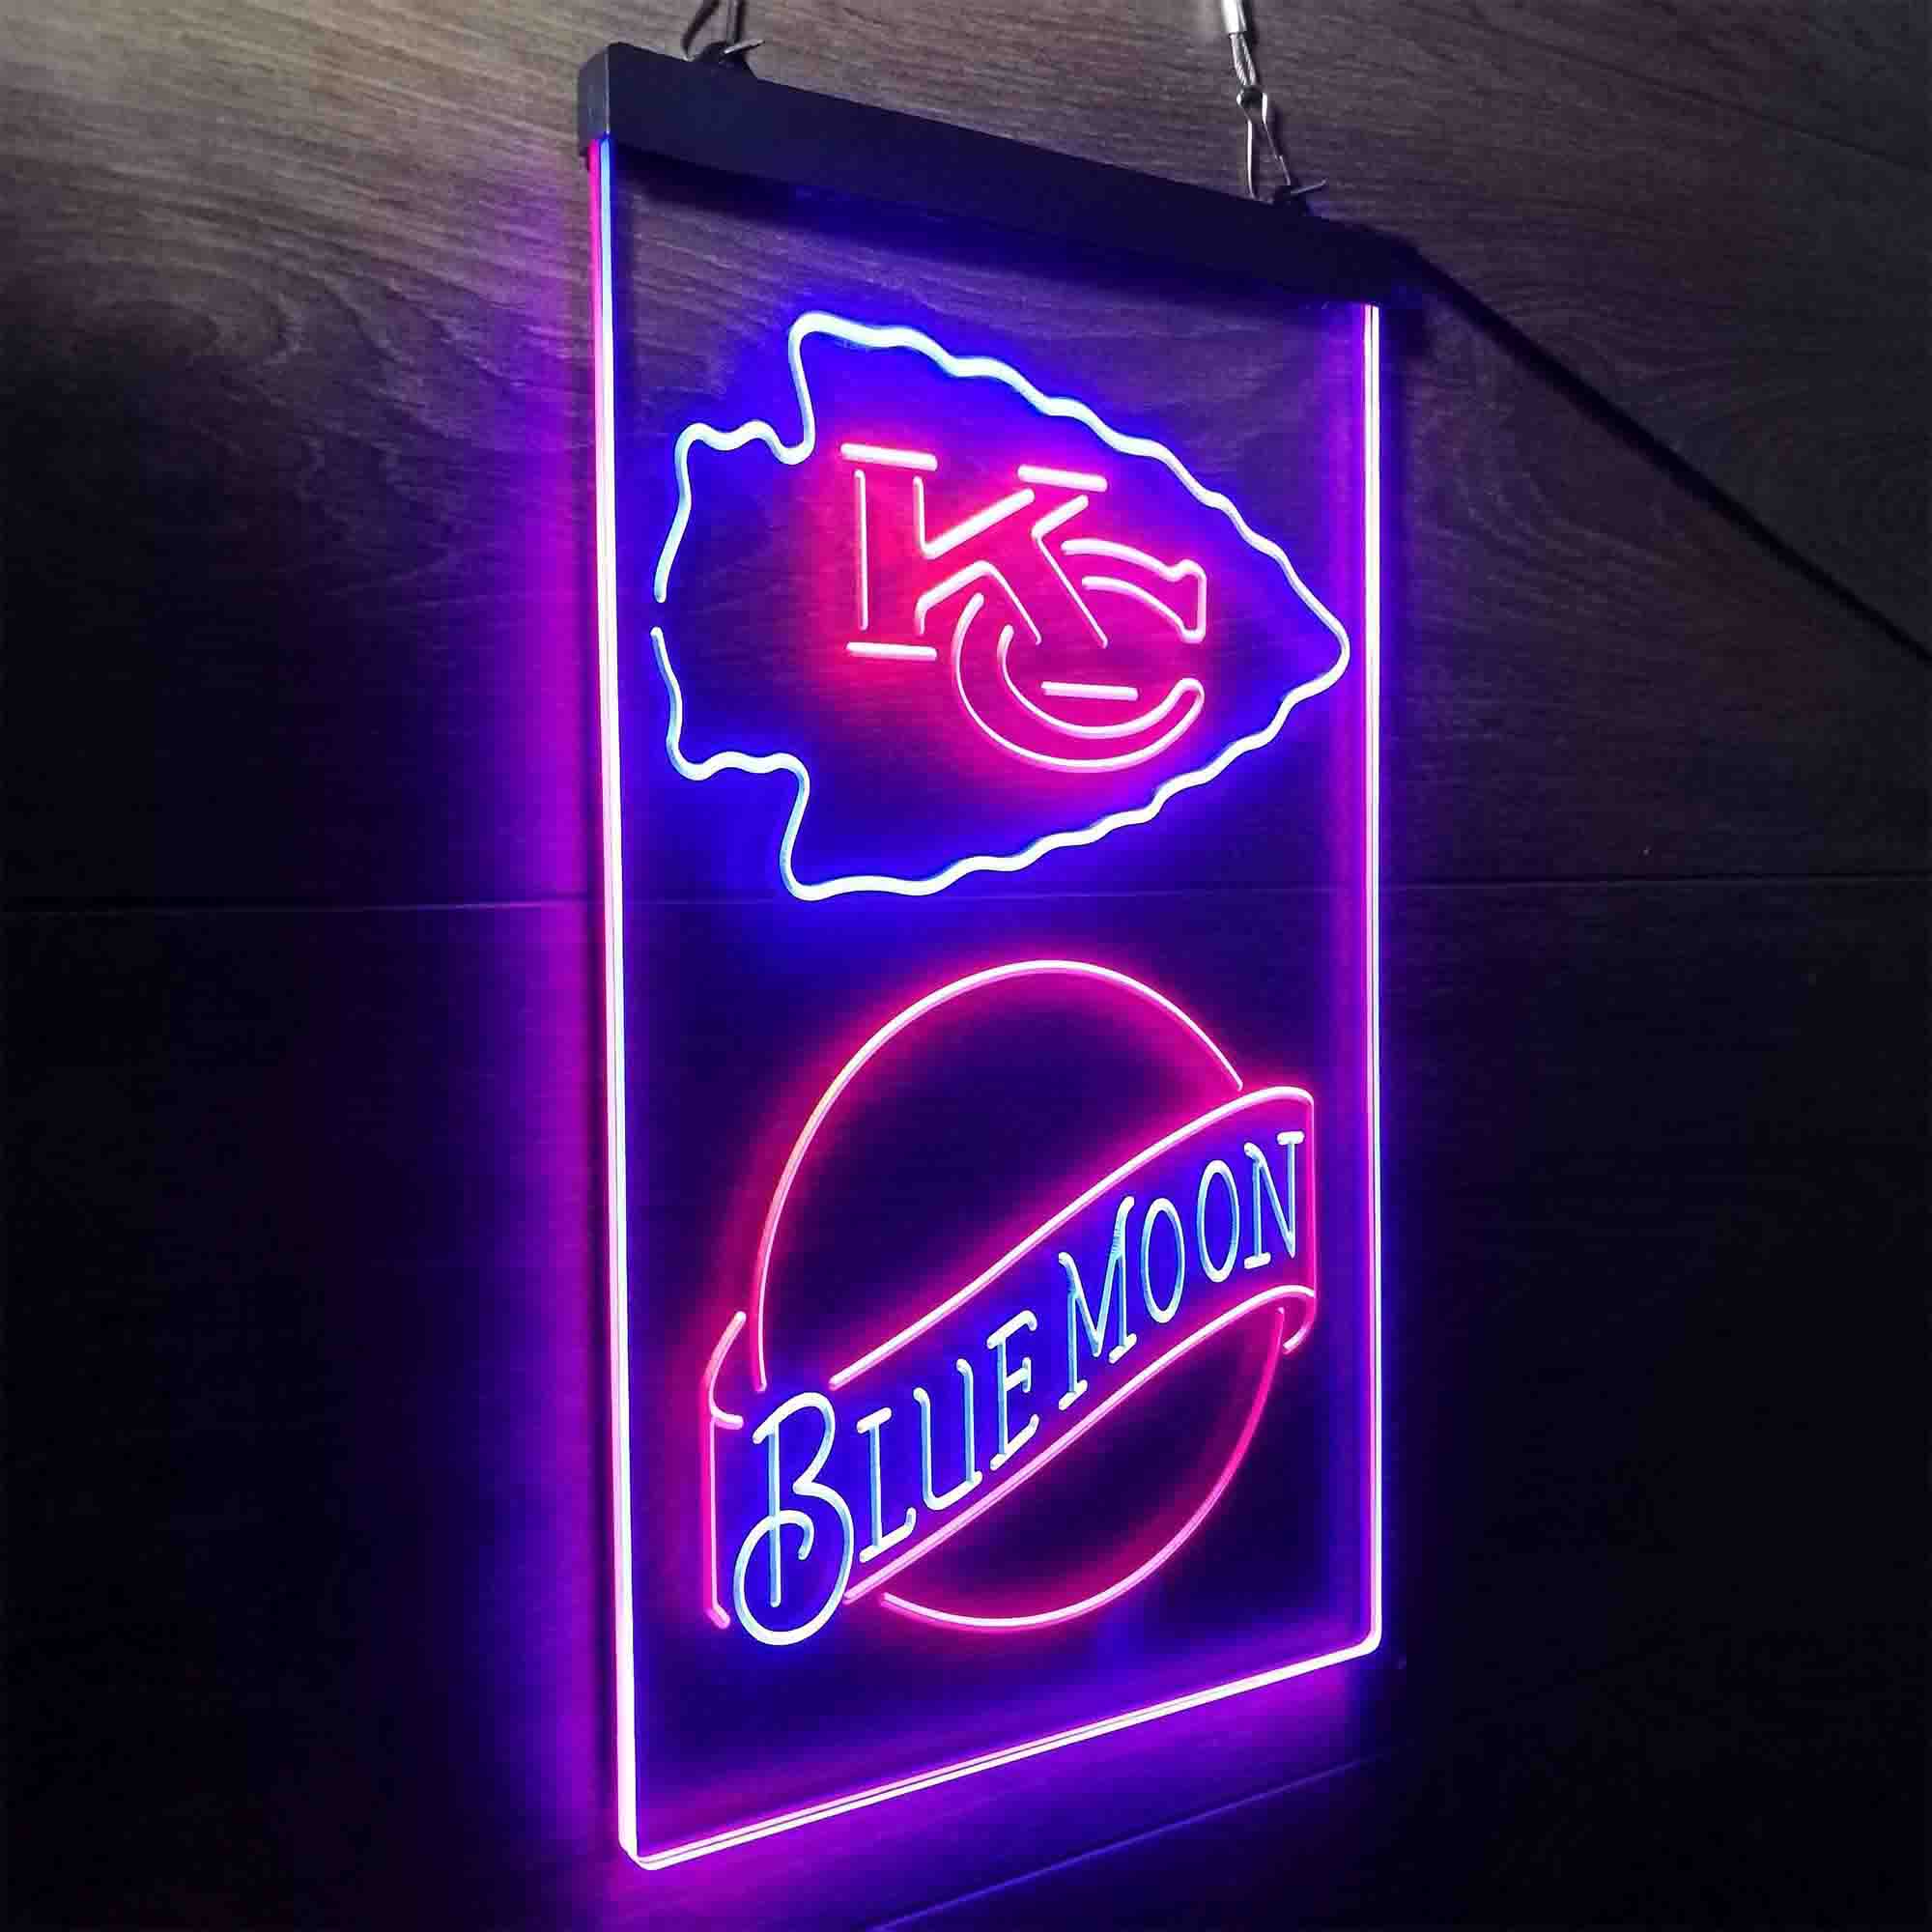 Blue Moon Bar Kansas City Chiefs Est. 1960 LED Neon Sign